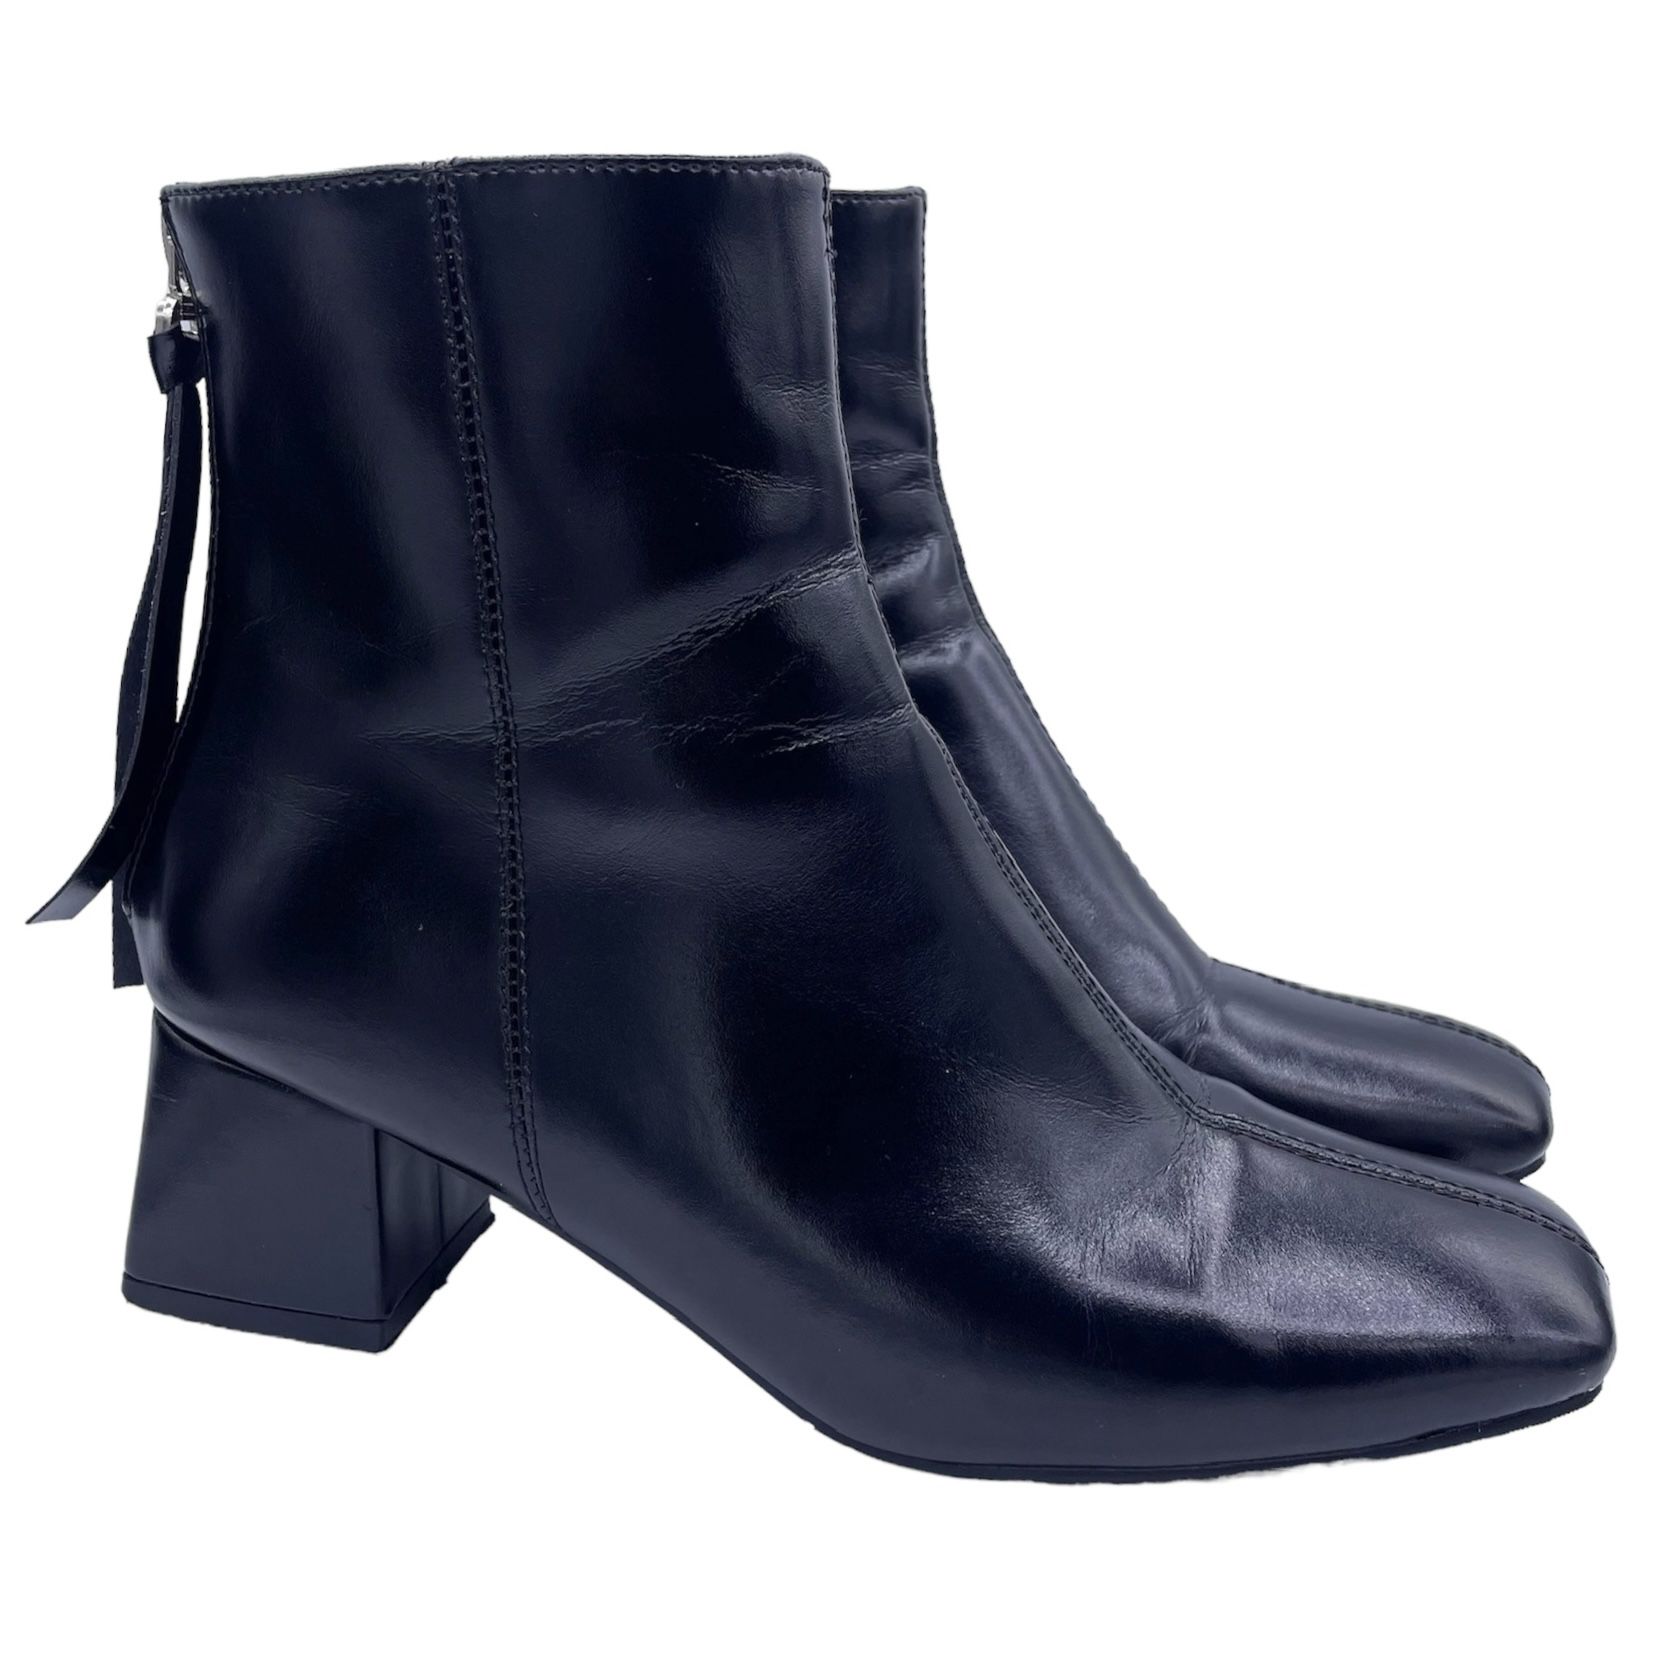 Jingpin black booties block heel back zipper Size 37/ 6.5US square toe